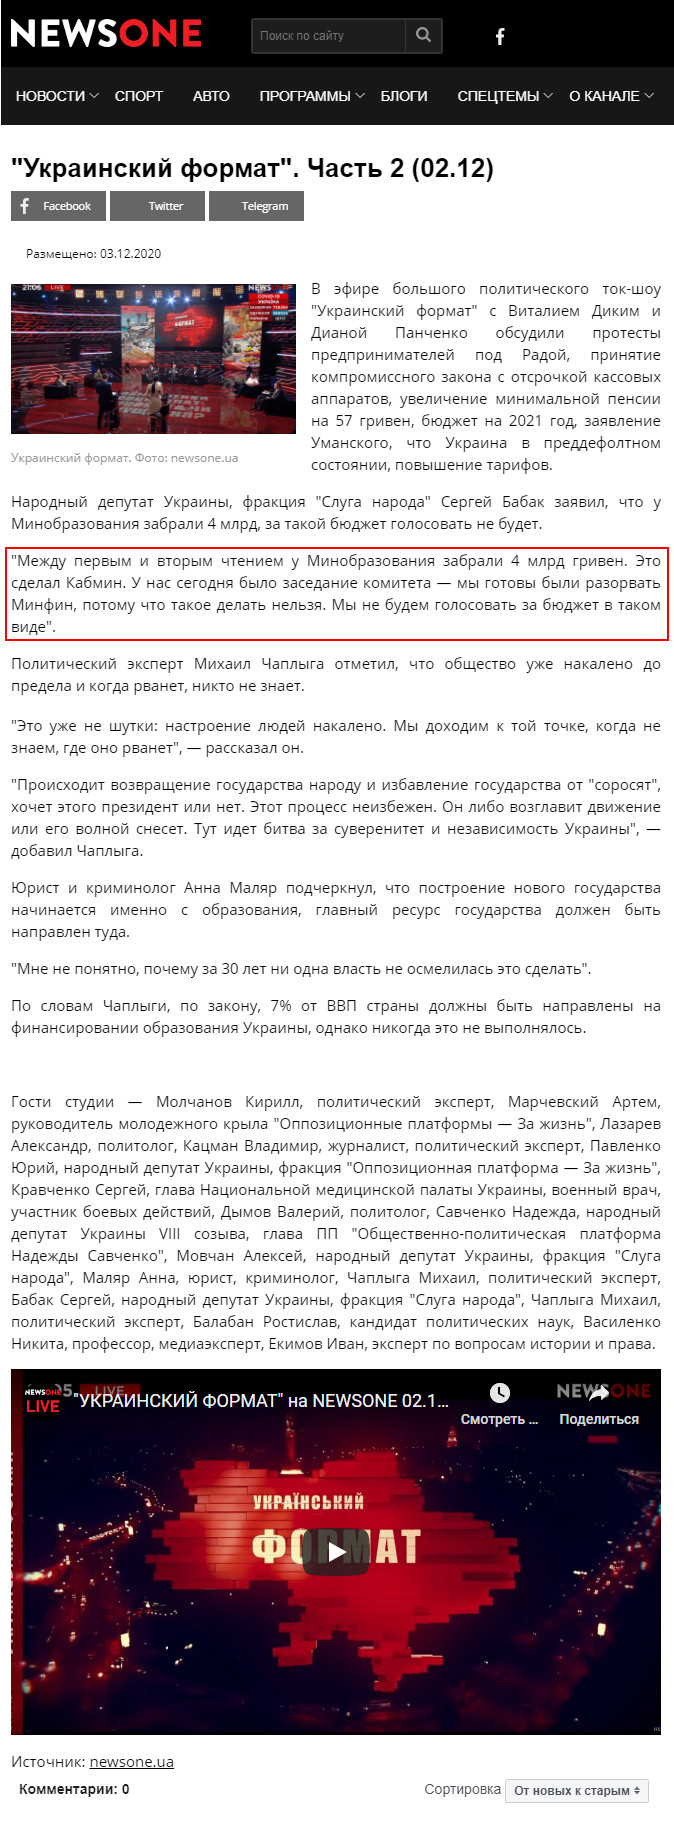 https://newsone.ua/news/ukrainskij-format/ukrainskiy_format_chast_2_0212.html